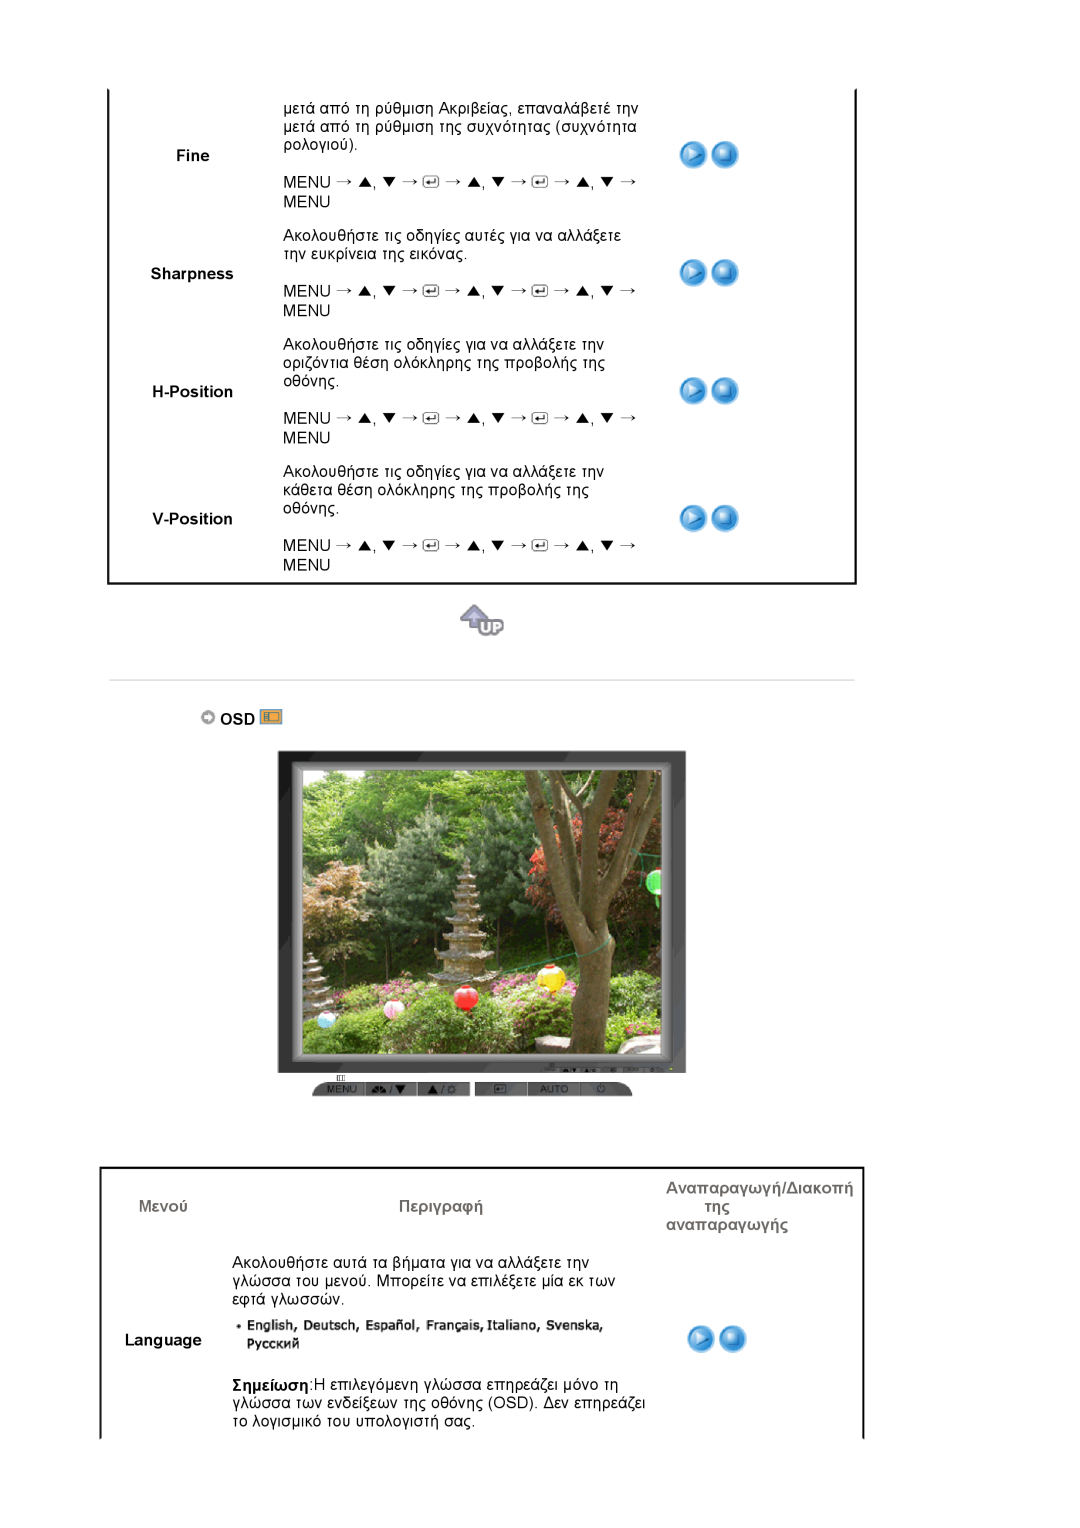 Samsung LS17MJVKS/EDC Fine Sharpness H-Position V-Position, Αναπαραγωγή/∆ιακοπή ΜενούΠεριγραφήτης αναπαραγωγής, Language 